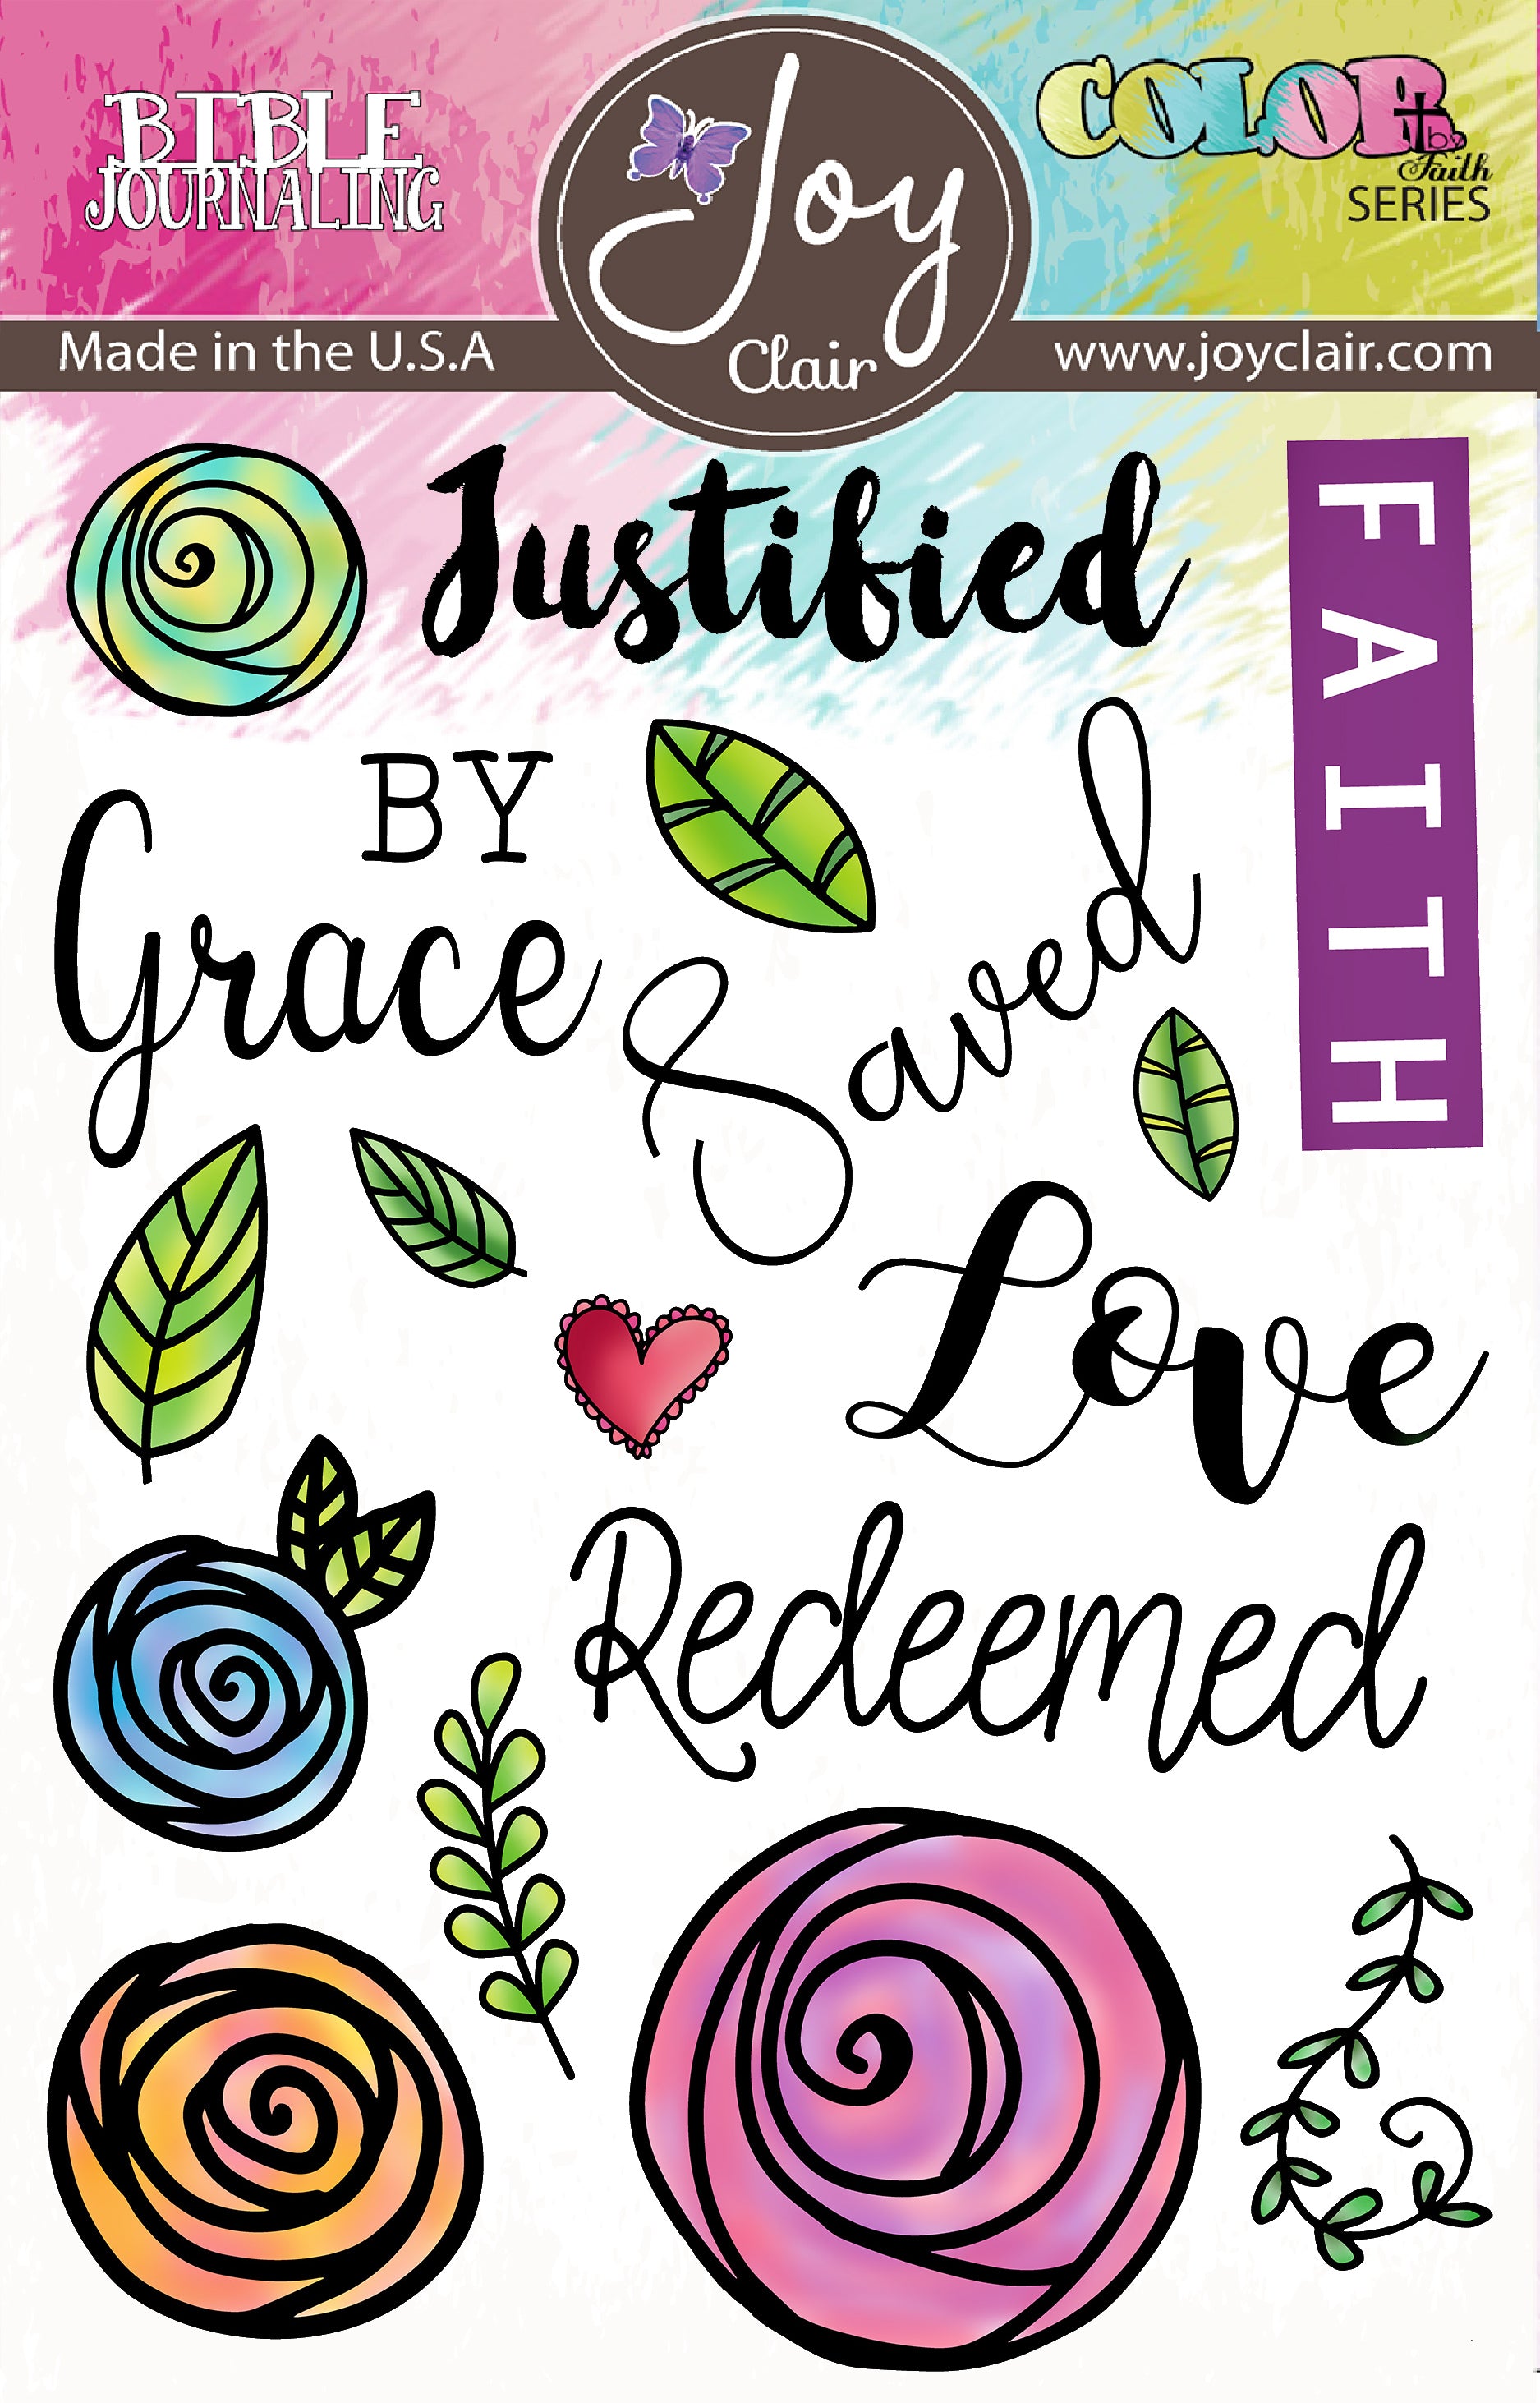 Free Bible Journaling Kit: Saved by Grace